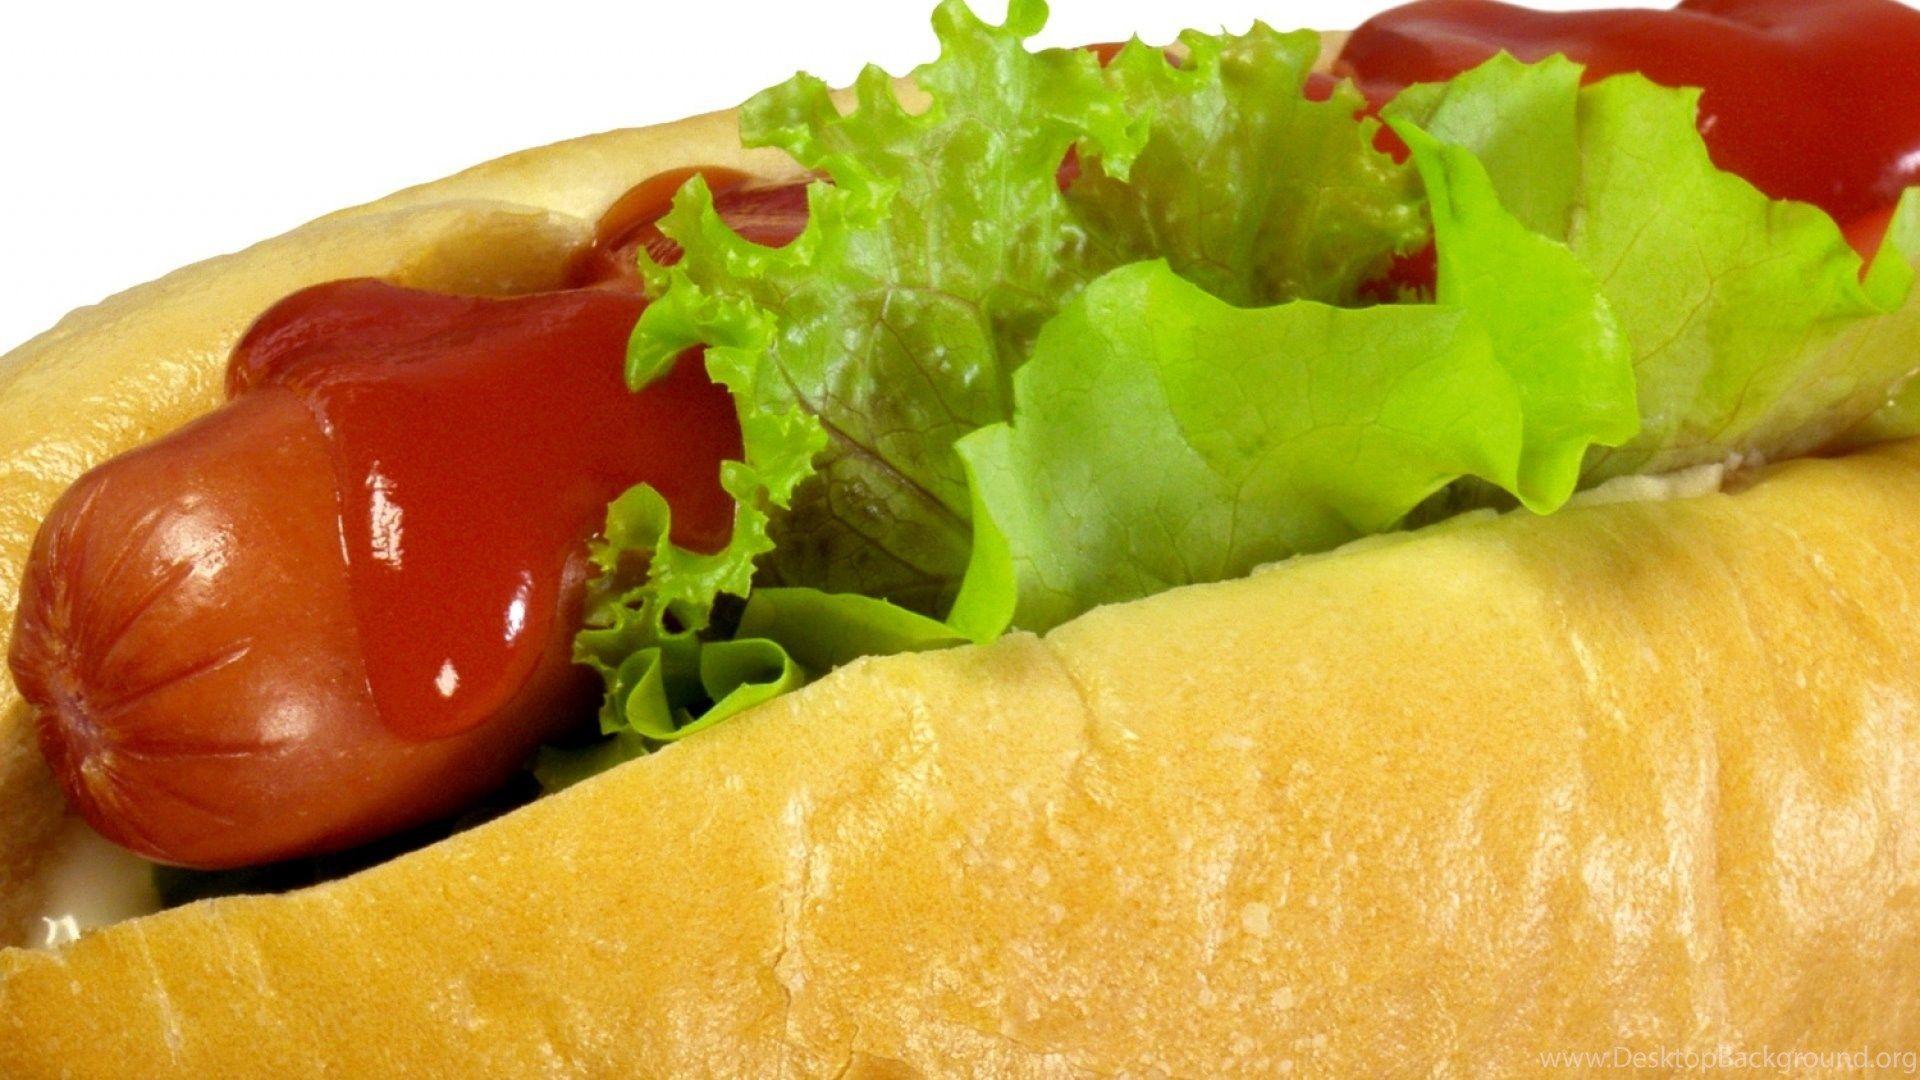 Download Wallpaper 2560x1080 Sausage, Salad, Roll, Hot Dog, Sauce